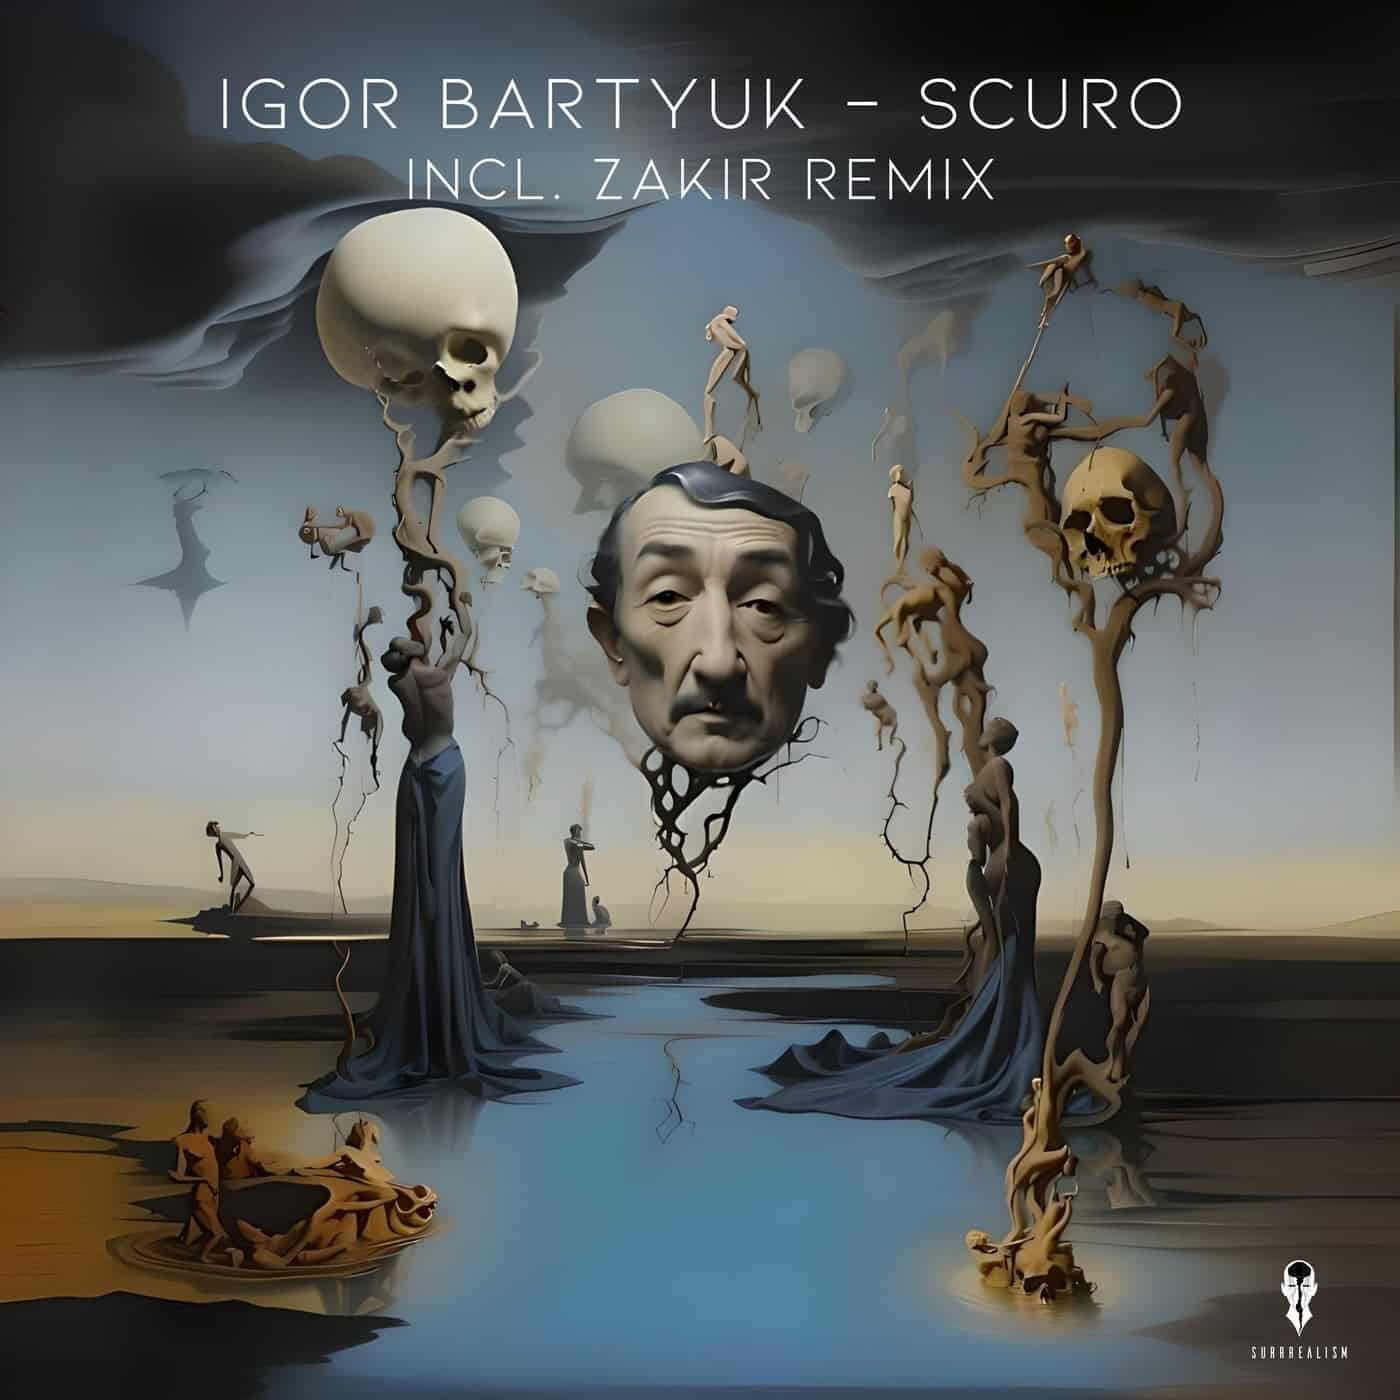 image cover: igor Bartyuk - Scuro on Surrrealism